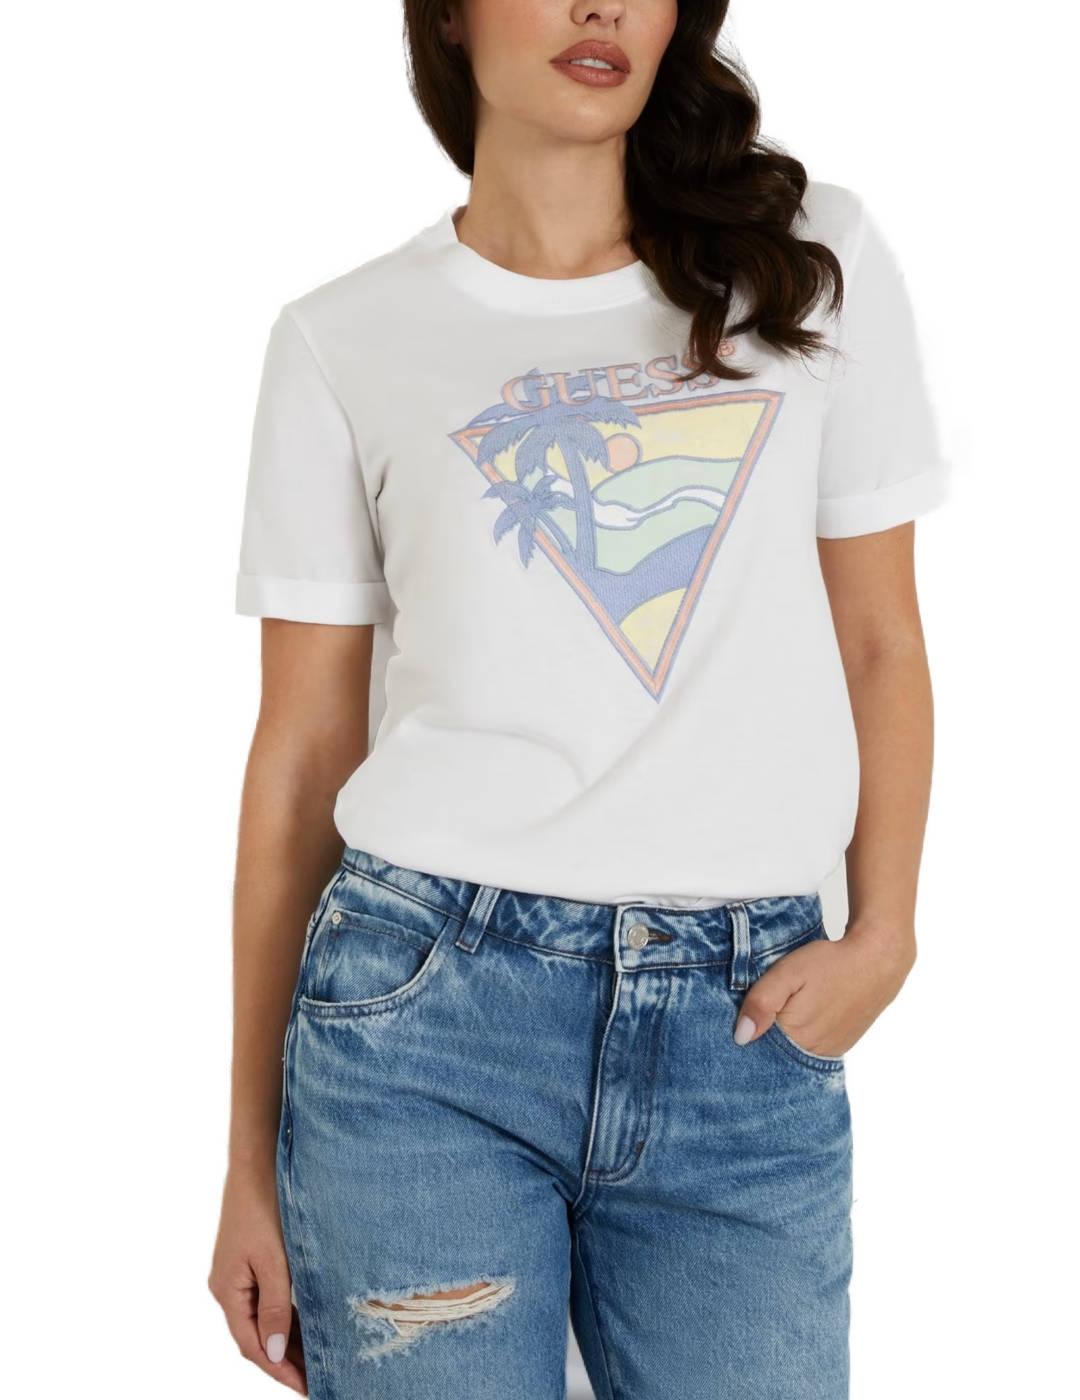 Camiseta Guess Beach triangle blanco manga corta para mujer